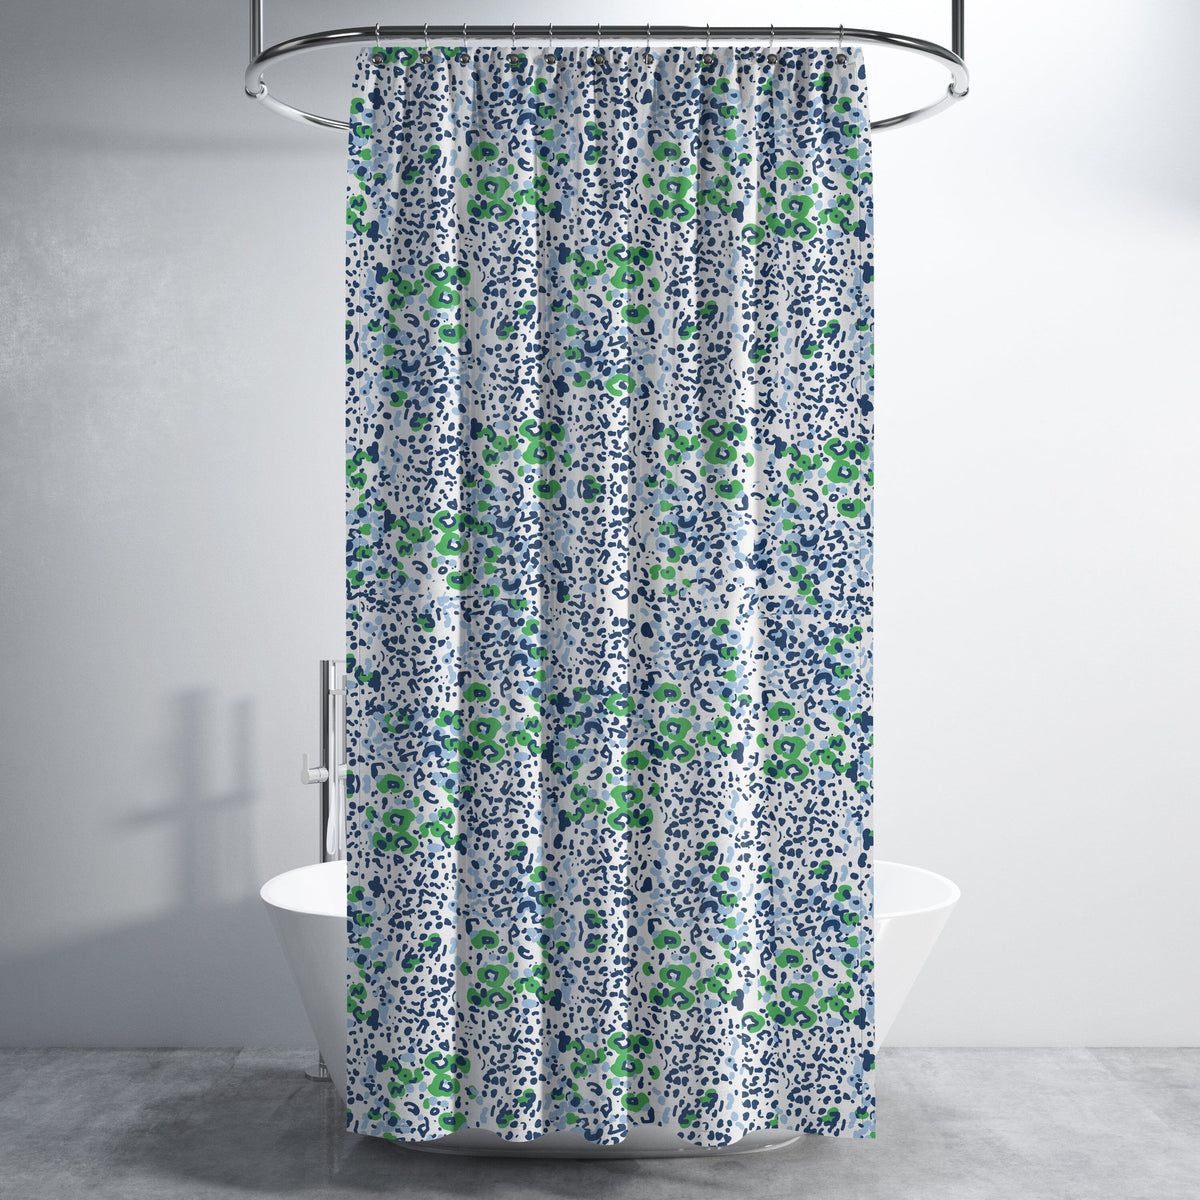 The Shower Panel - Poppy Field Blue & Green Bath, Shower Panel MWW 